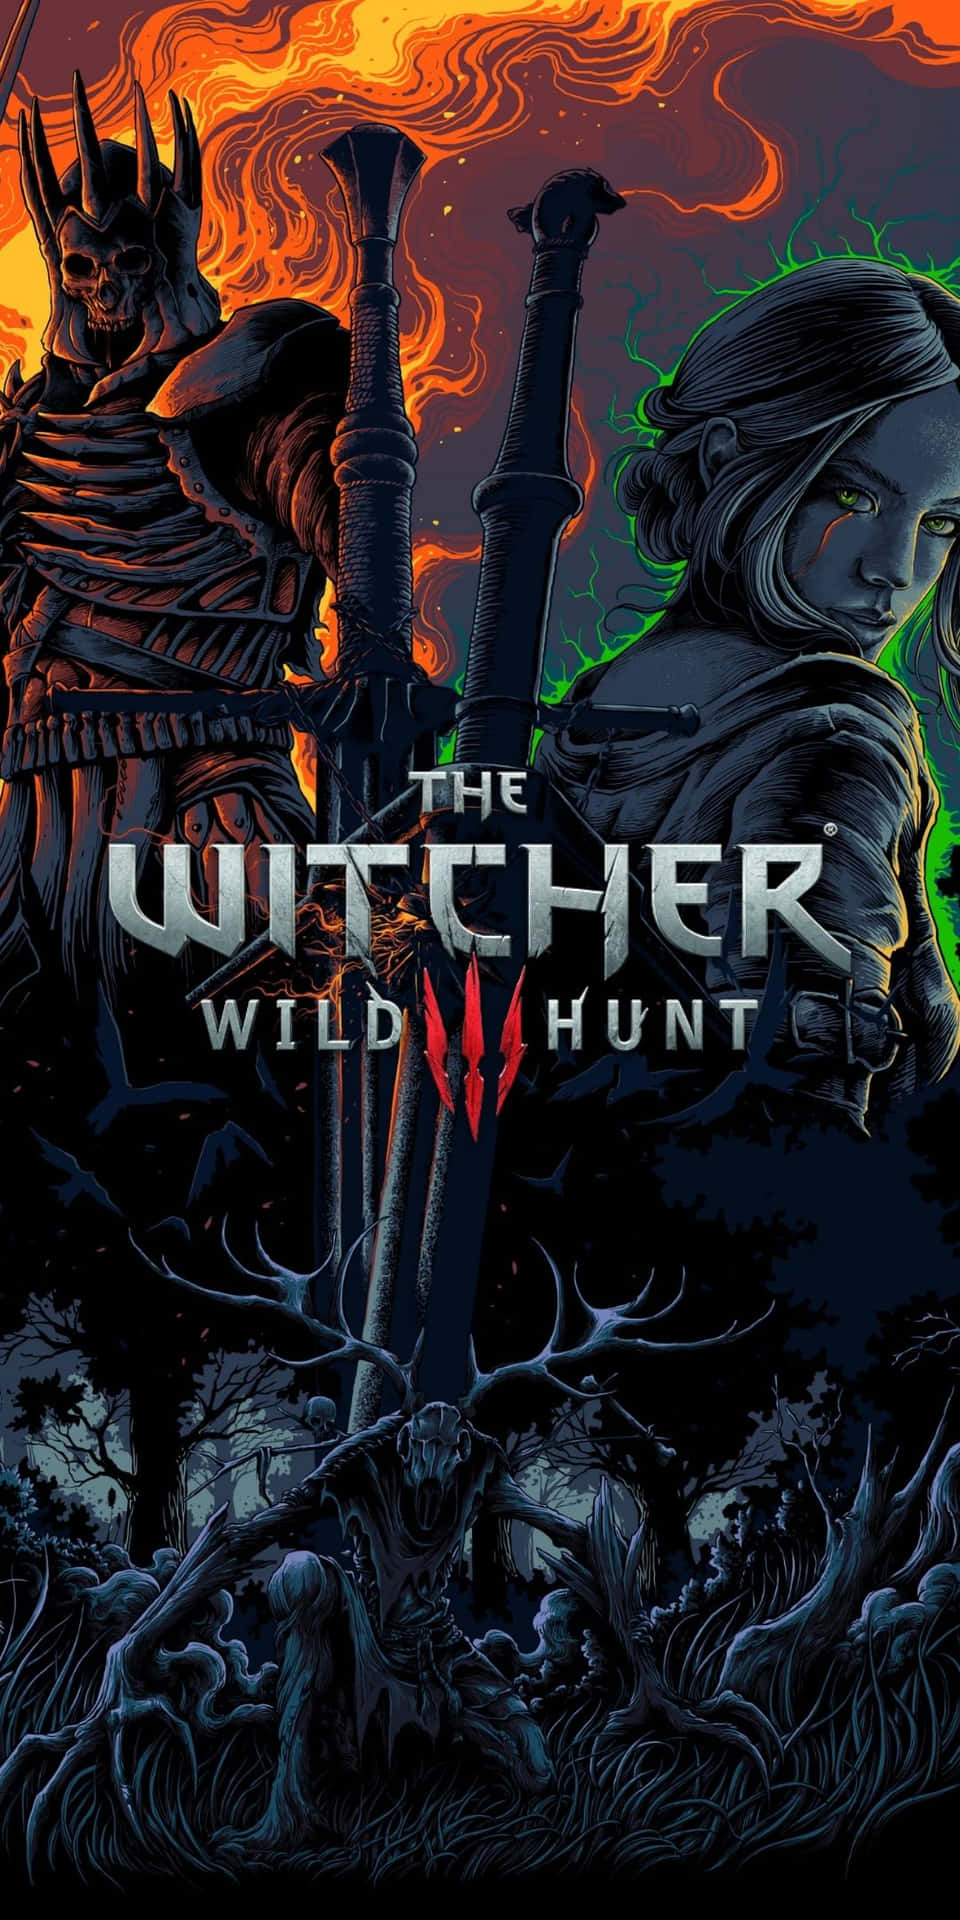 Esploral'ambiente Vibrante Di The Witcher 3 Con Lo Straordinario Pixel 3.